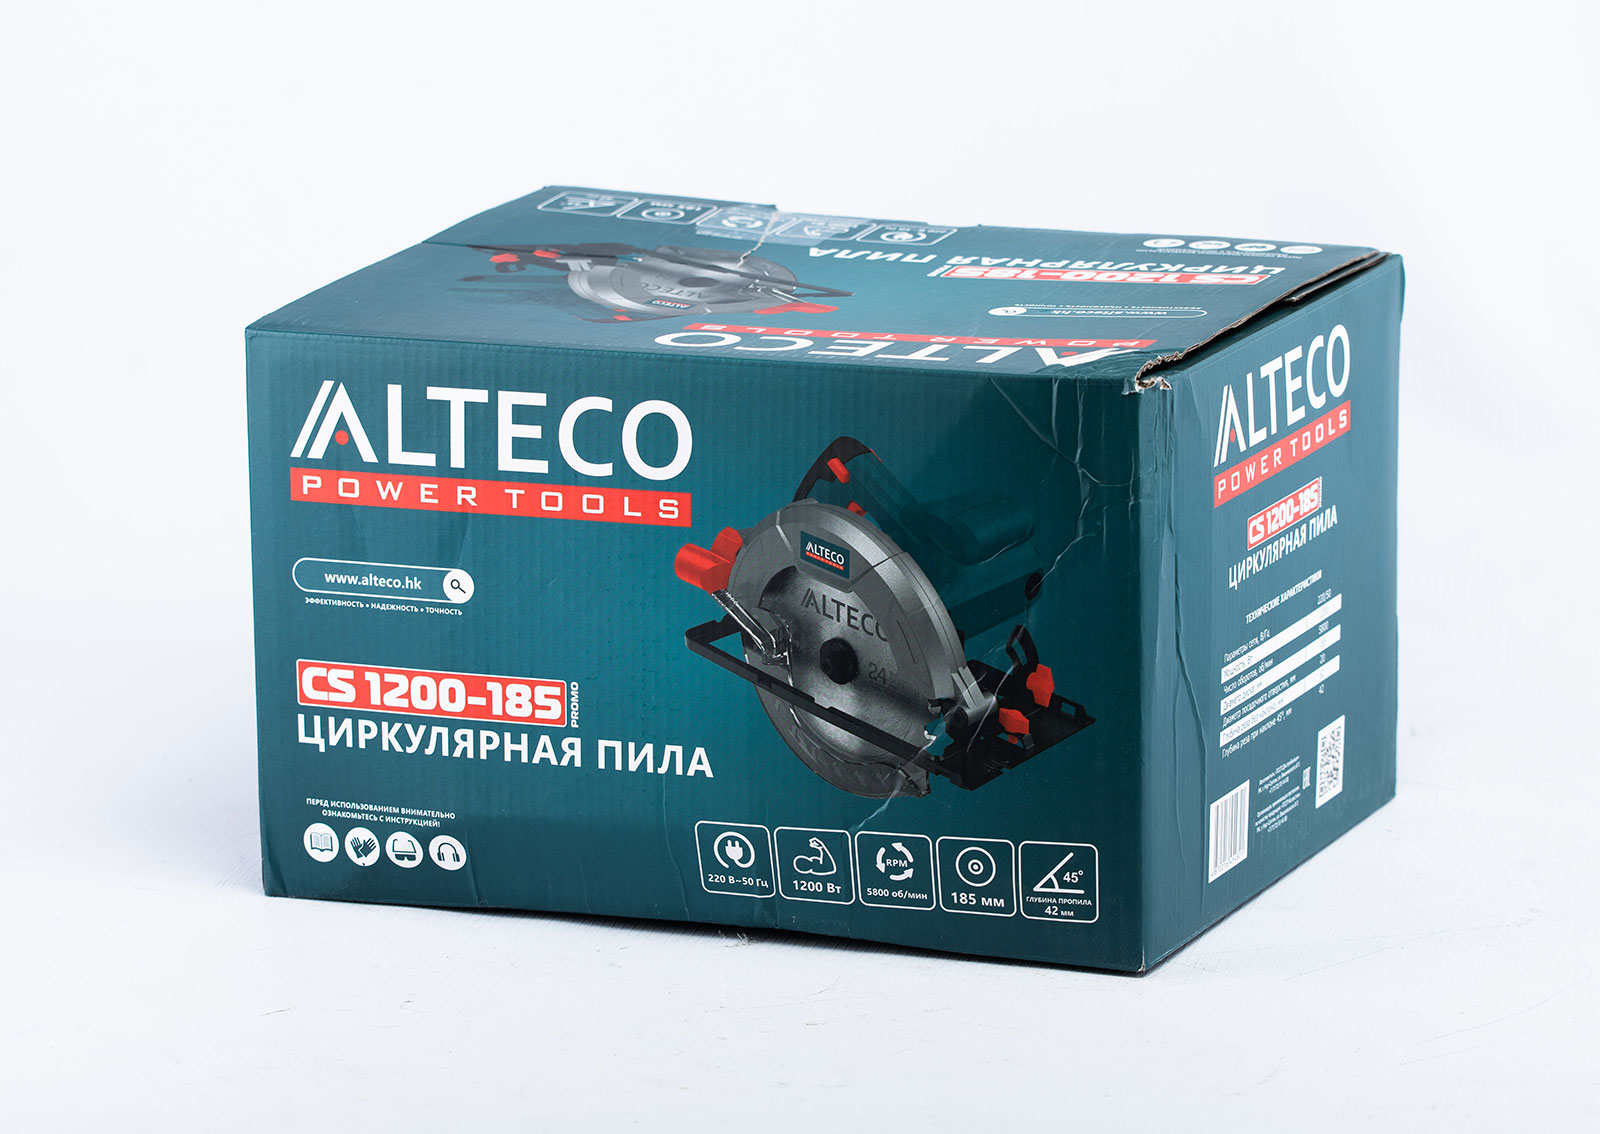 Циркулярная пила ALTECO Promo CS 1200-185, 1.2 кВт, 5800 об/мин, диаметр диска 18.5 см (31014)